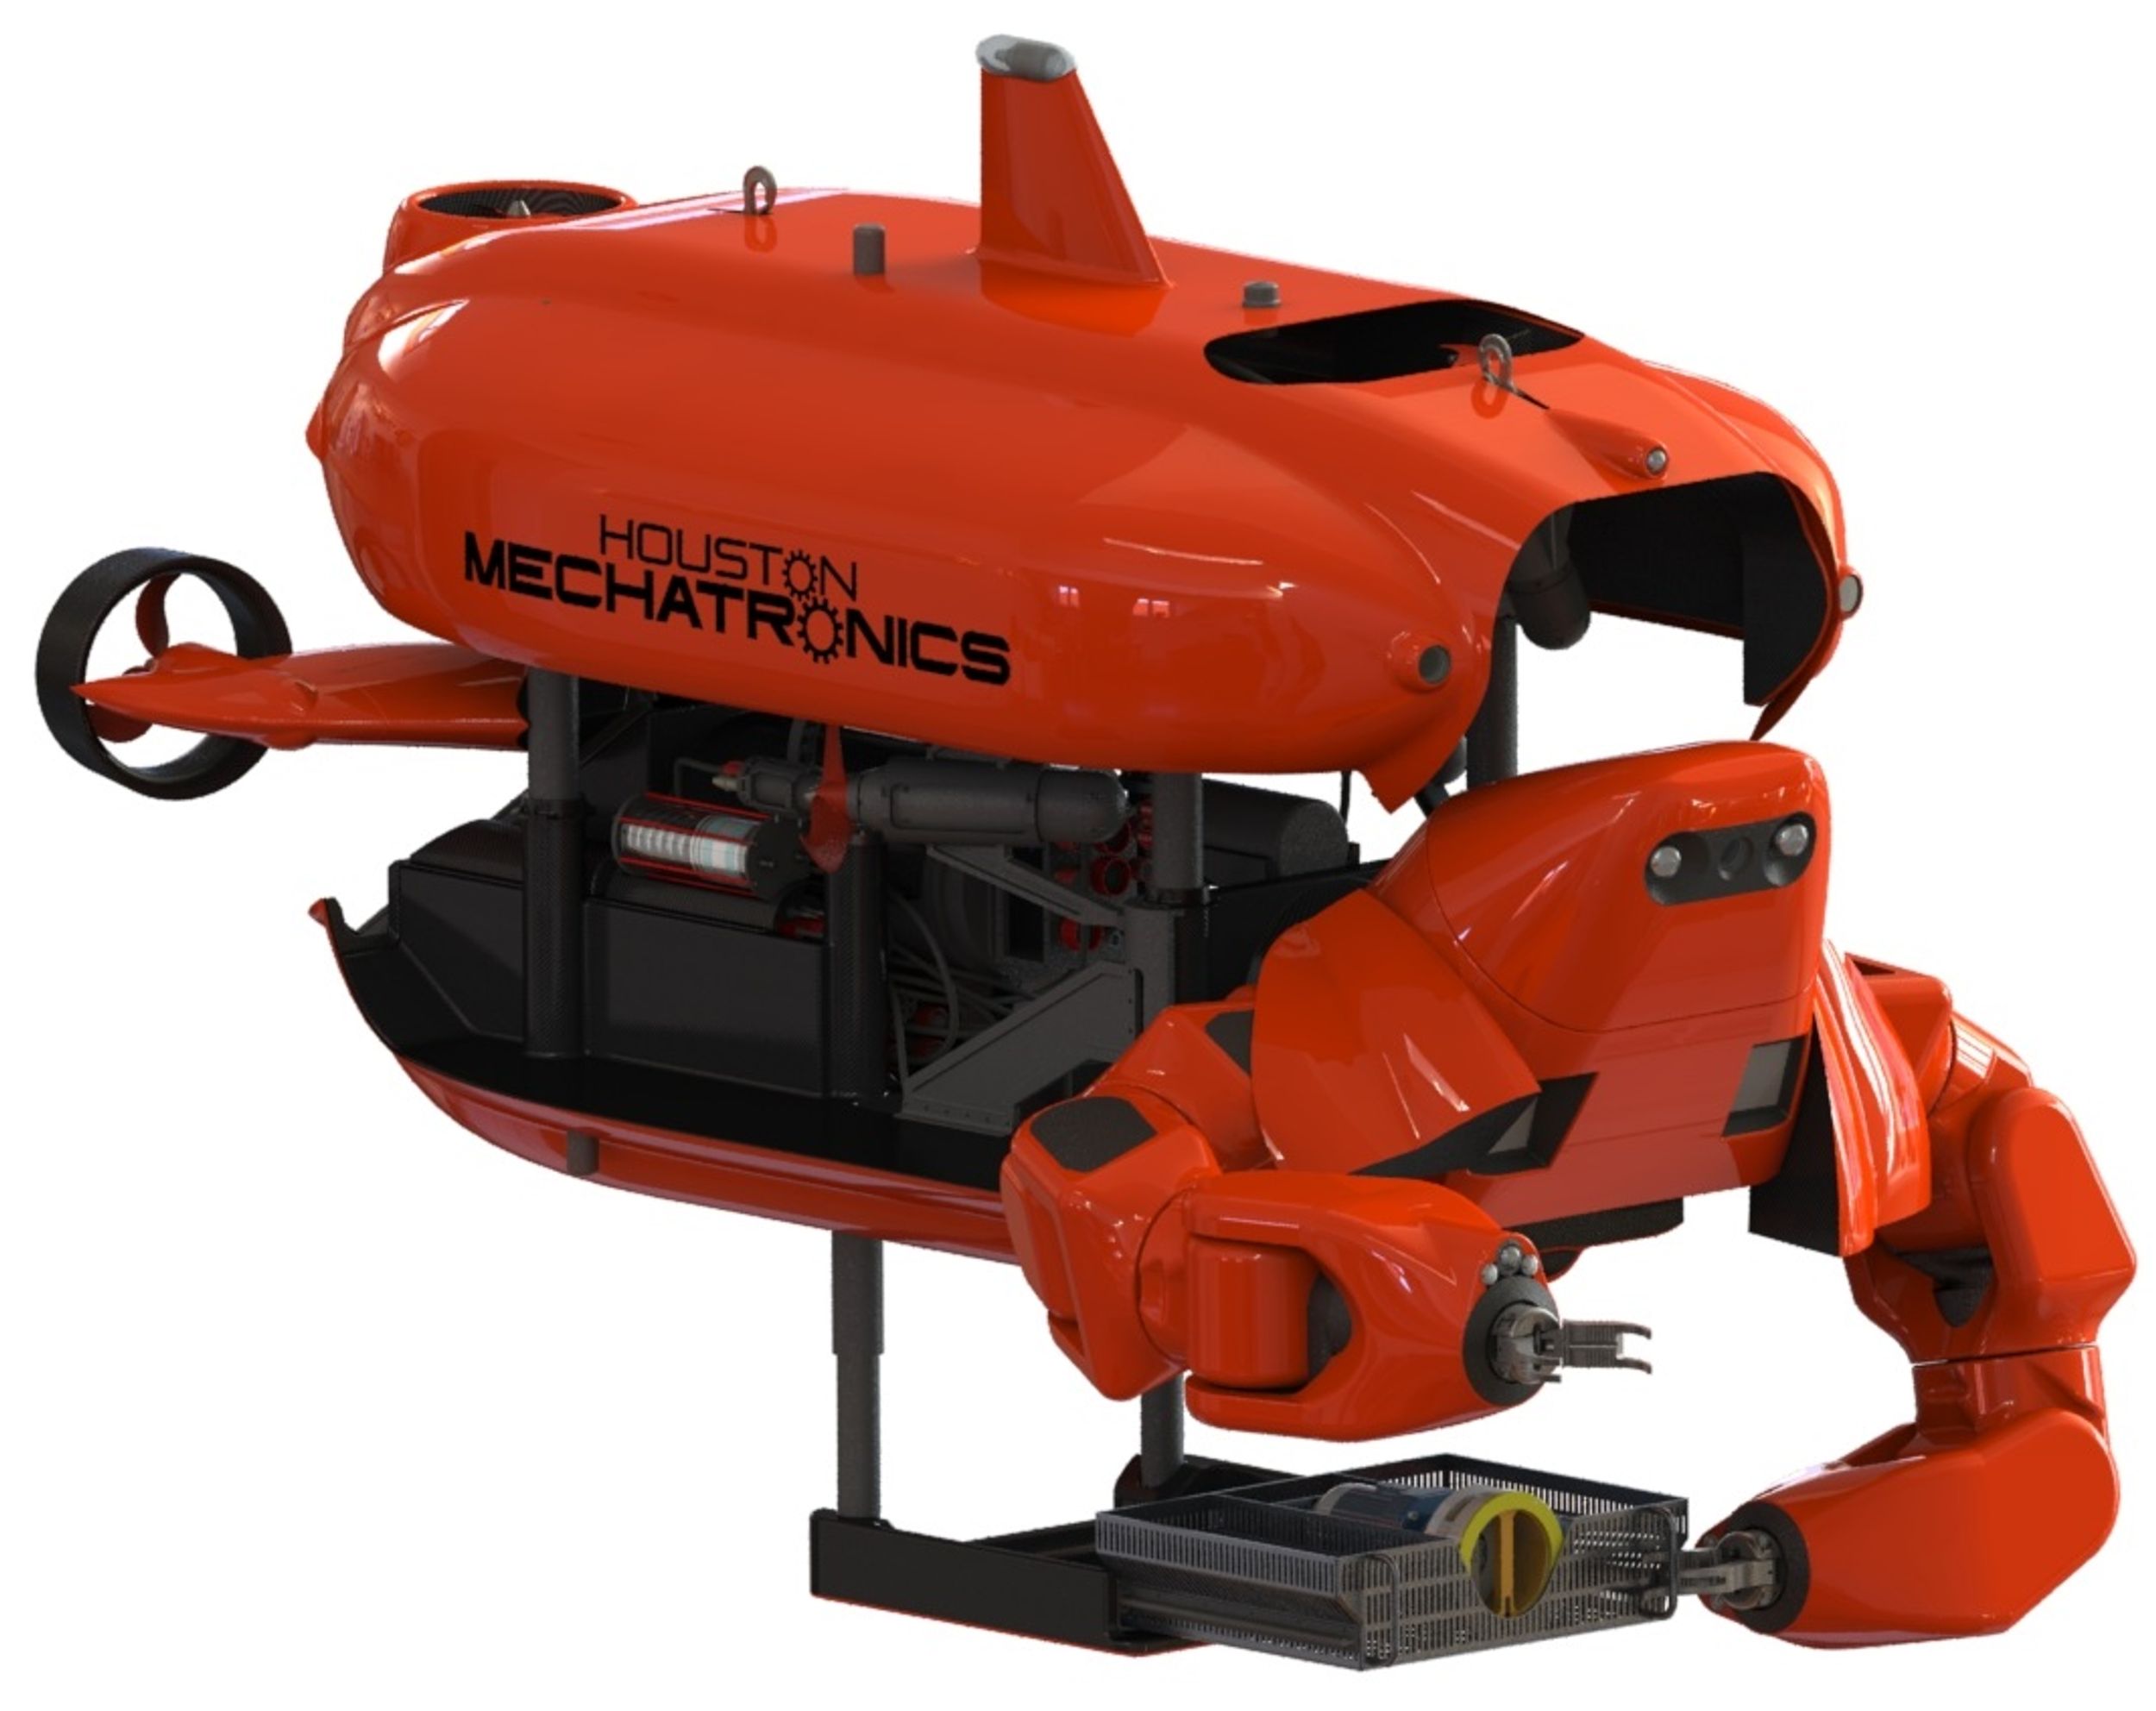 Aquanaut robot, created by Houston Mechatronics